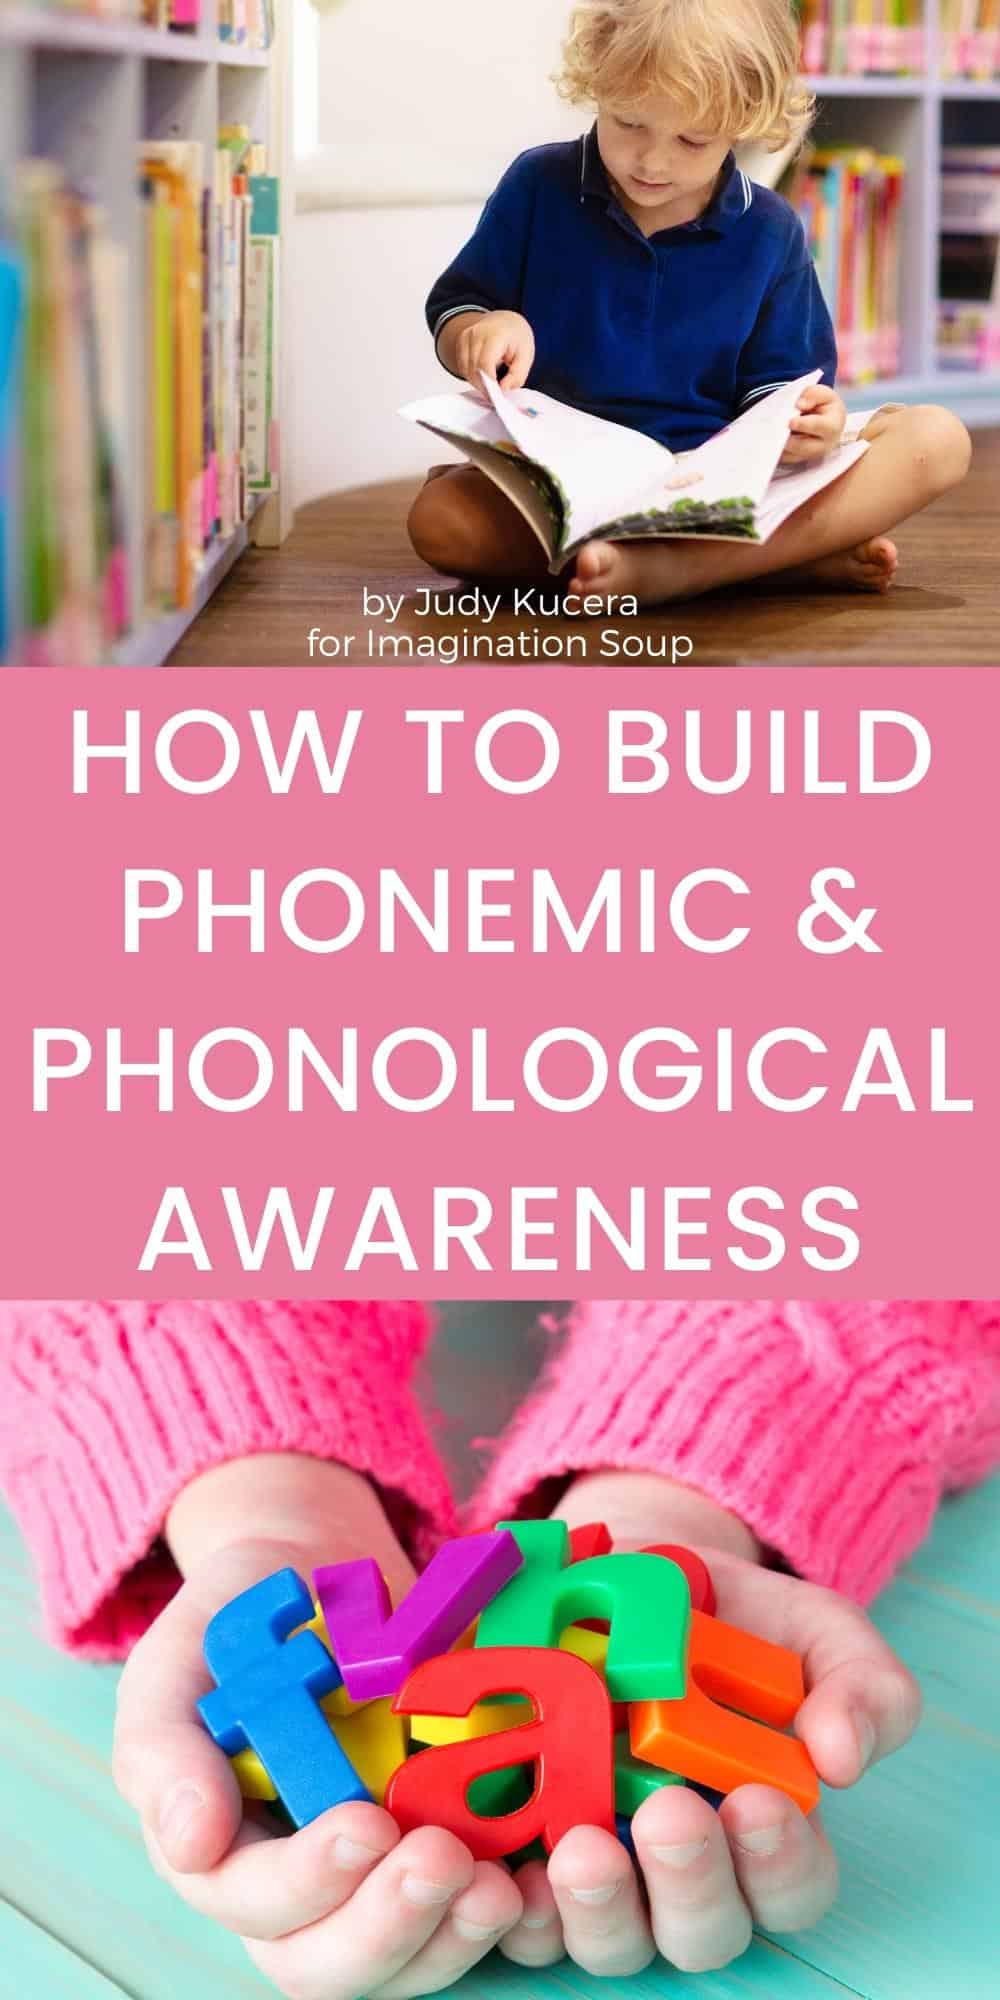 How to Build Phonemic & Phonological Awareness